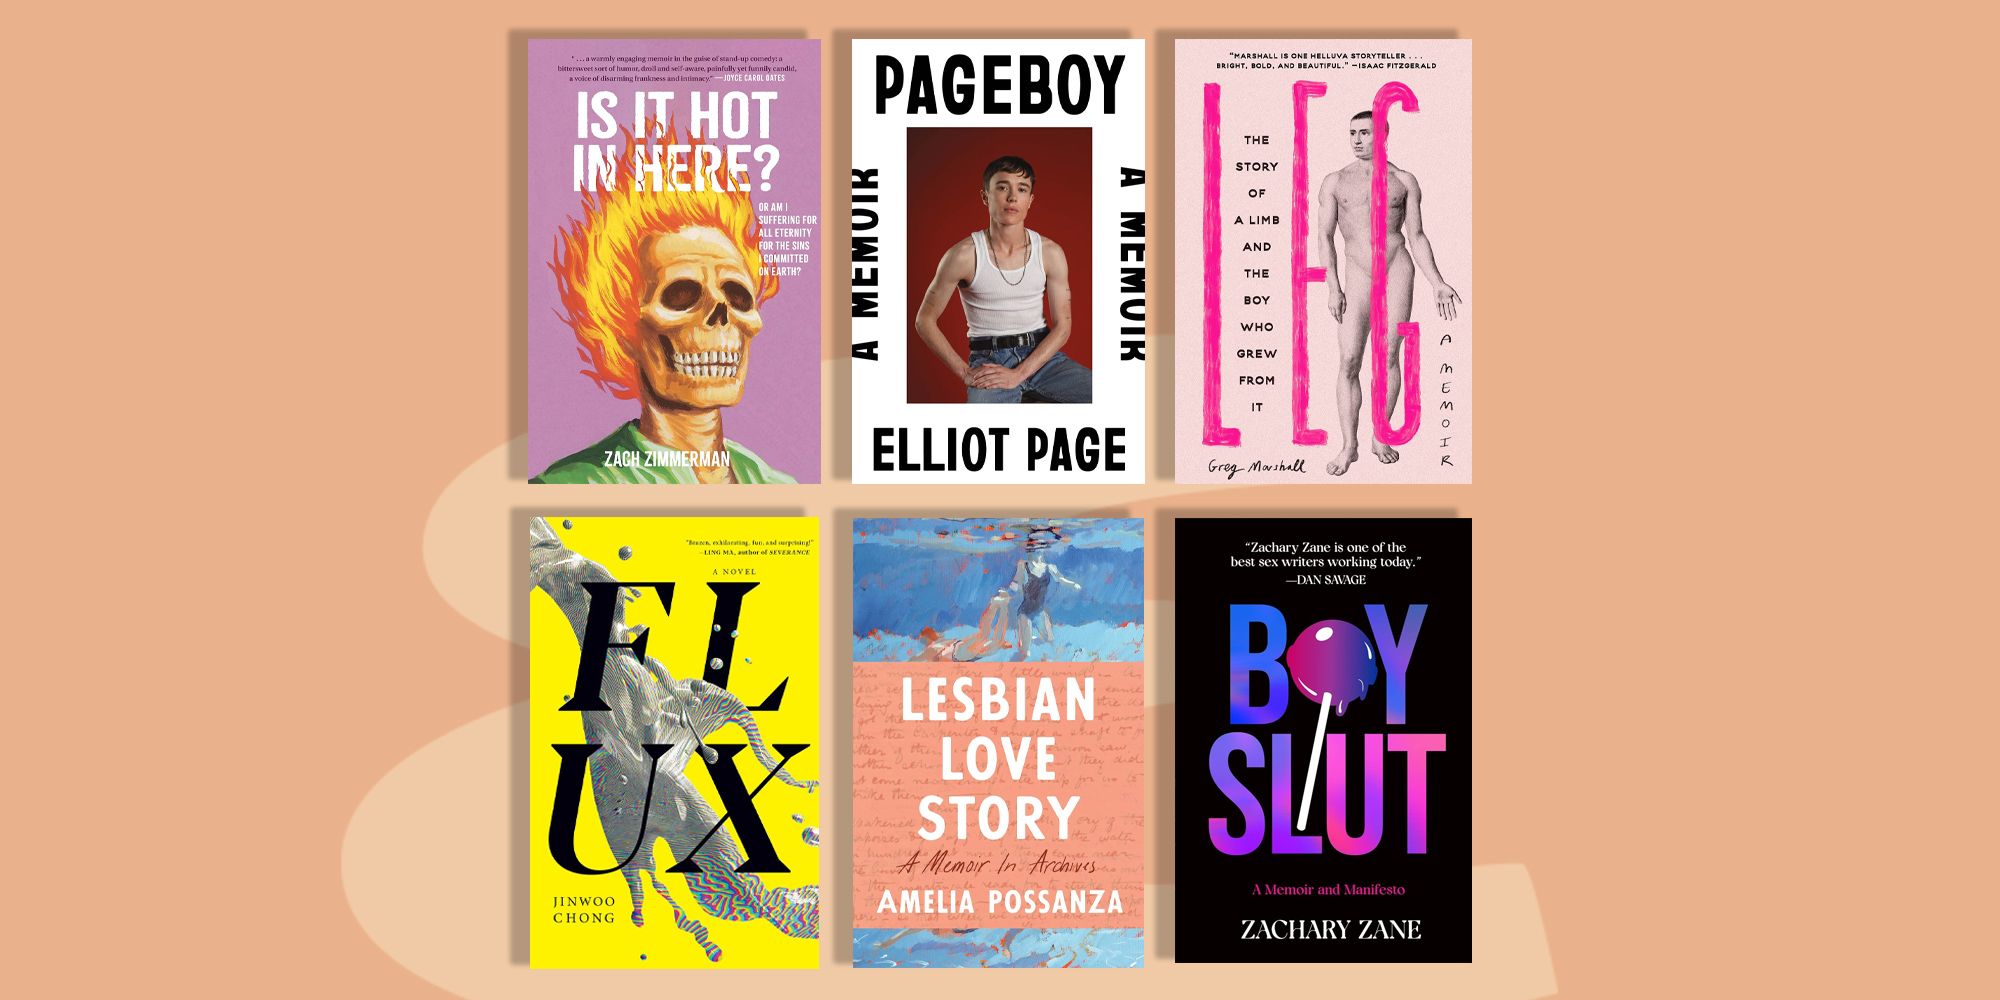 LGBTQ+ – PowerLibrarian Book Reviews